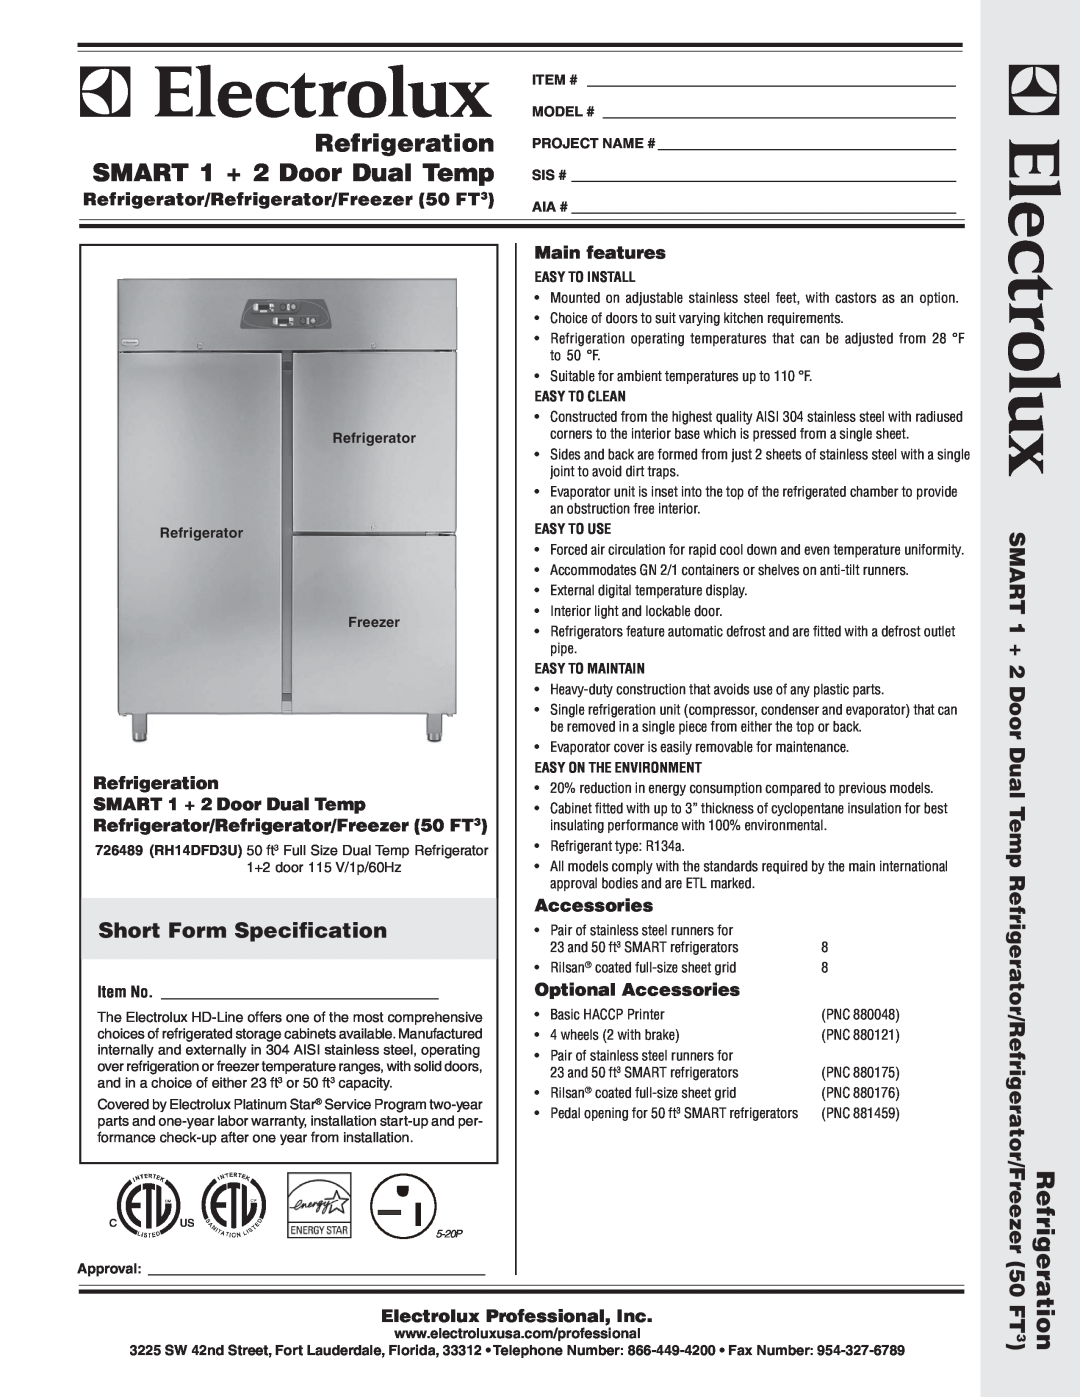 Electrolux 726489 warranty Short Form Specification, SMART 1 + 2 Door Dual Temp Refrigerator/Refrigerator/Freezer 50 FT3 